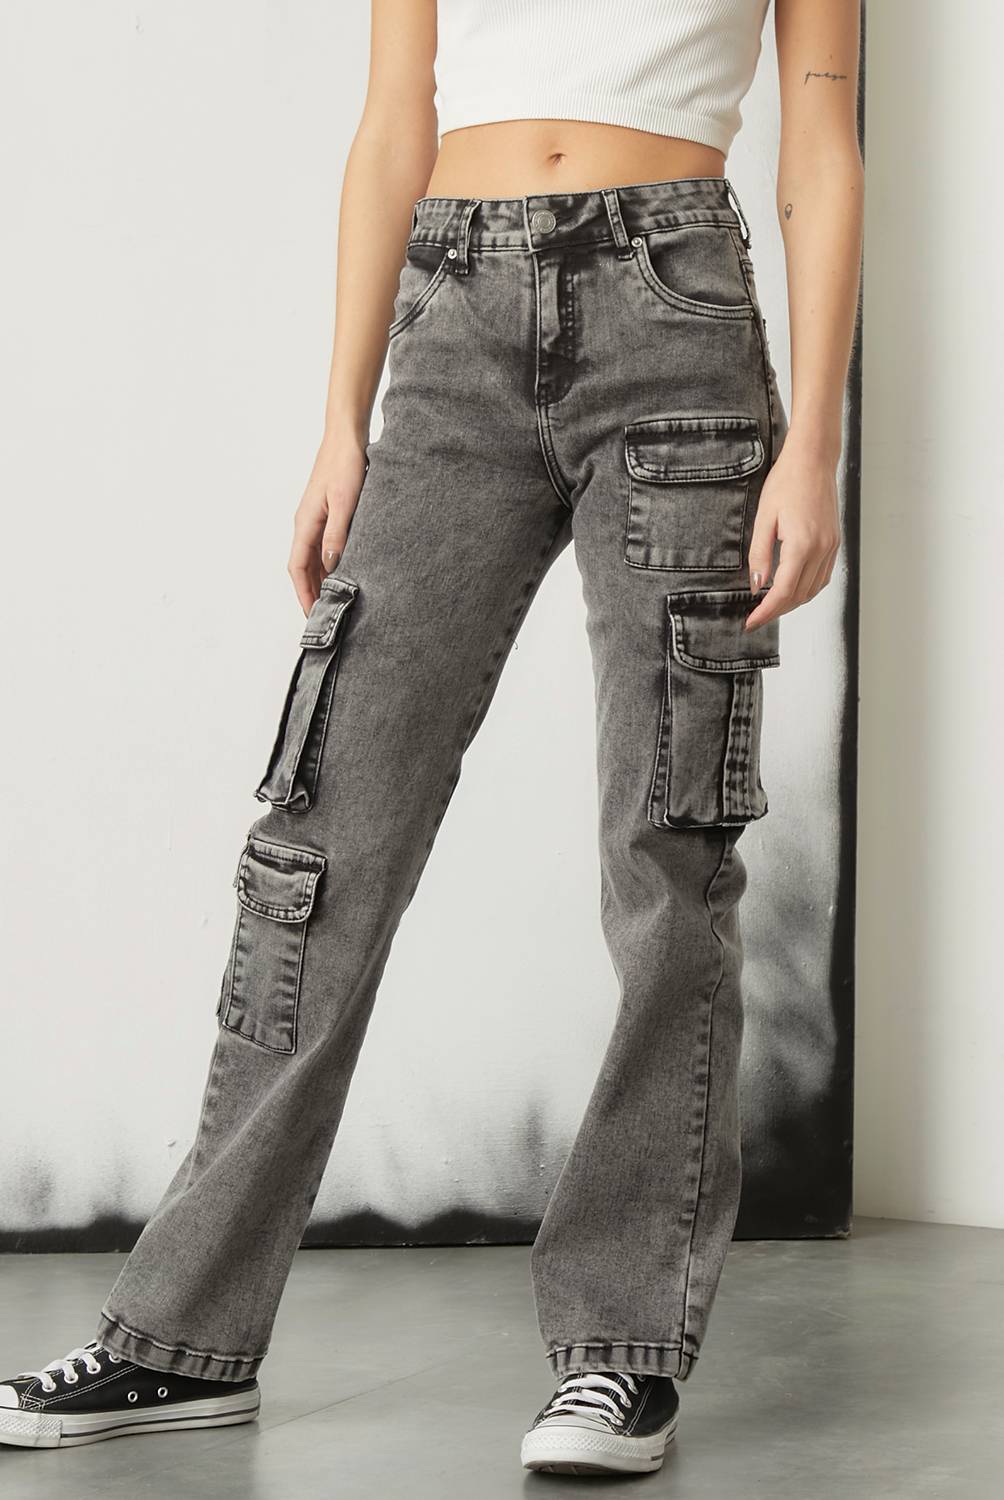 AMERICANINO - Americanino Jeans Cargo Tiro Medio Algodón Mujer